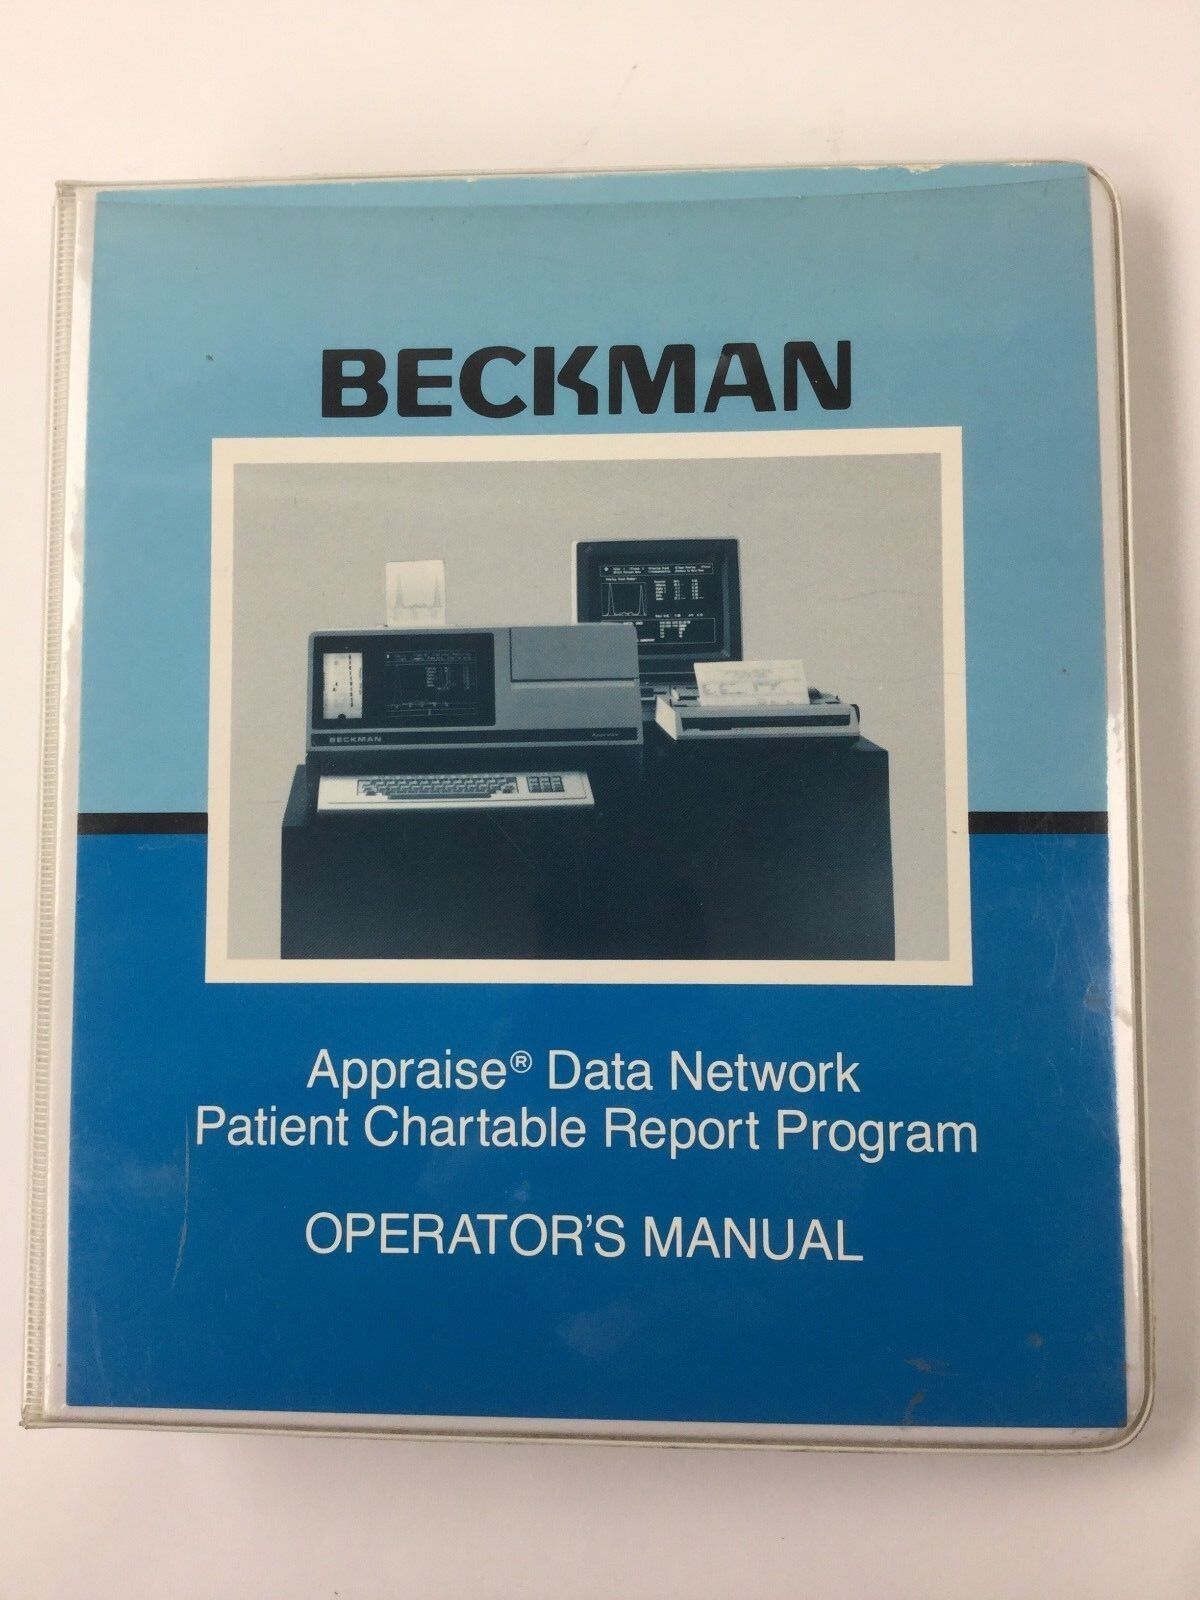 Beckman Appraise Data Network Patient Chartable Report Program Opr Manual